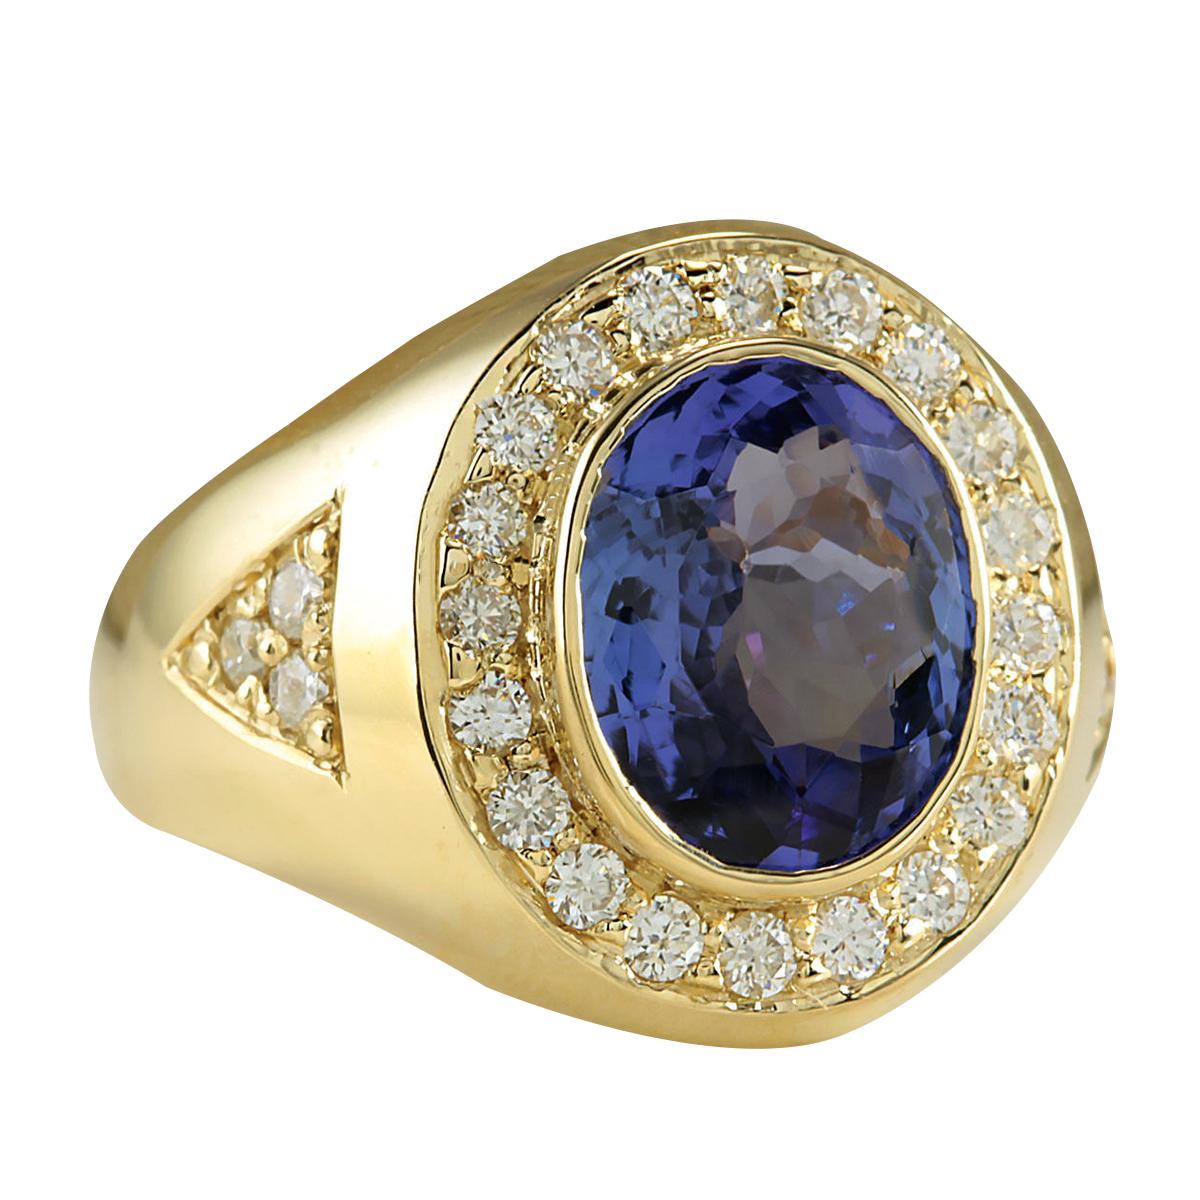 Stamped: 14K Yellow Gold
Total Ring Weight: 8.5 Grams
Total Natural Tanzanite Weight is 4.25 Carat (Measures: 12.00x10.00 mm)
Color: Blue
Total Natural Diamond Weight is 0.70 Carat
Color: F-G, Clarity: VS2-SI1
Face Measures: 17.85x15.25 mm
Sku: